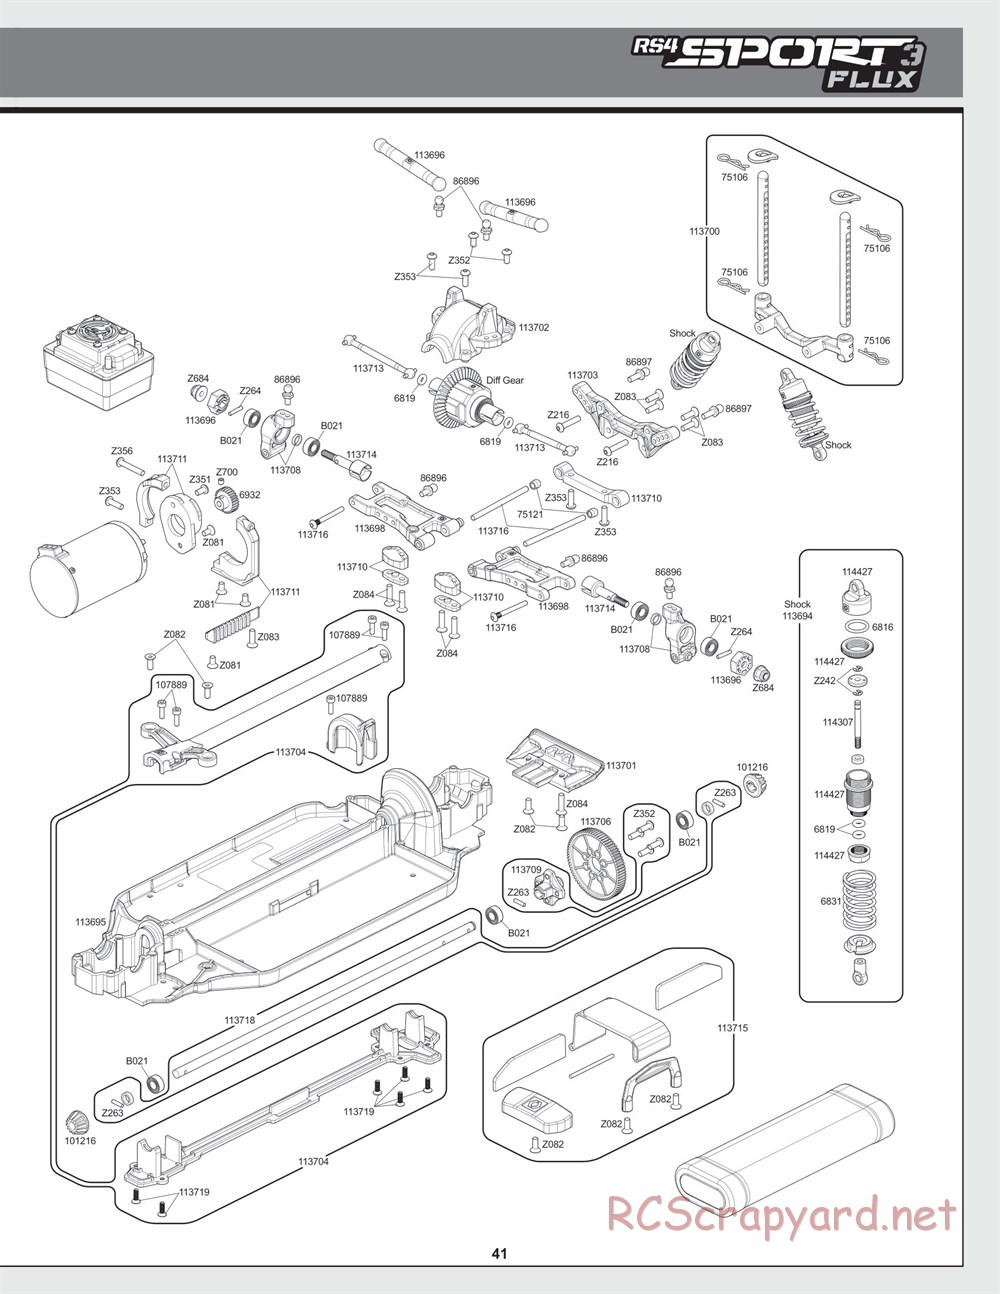 HPI - RS4 Sport 3 Flux - Manual - Page 41